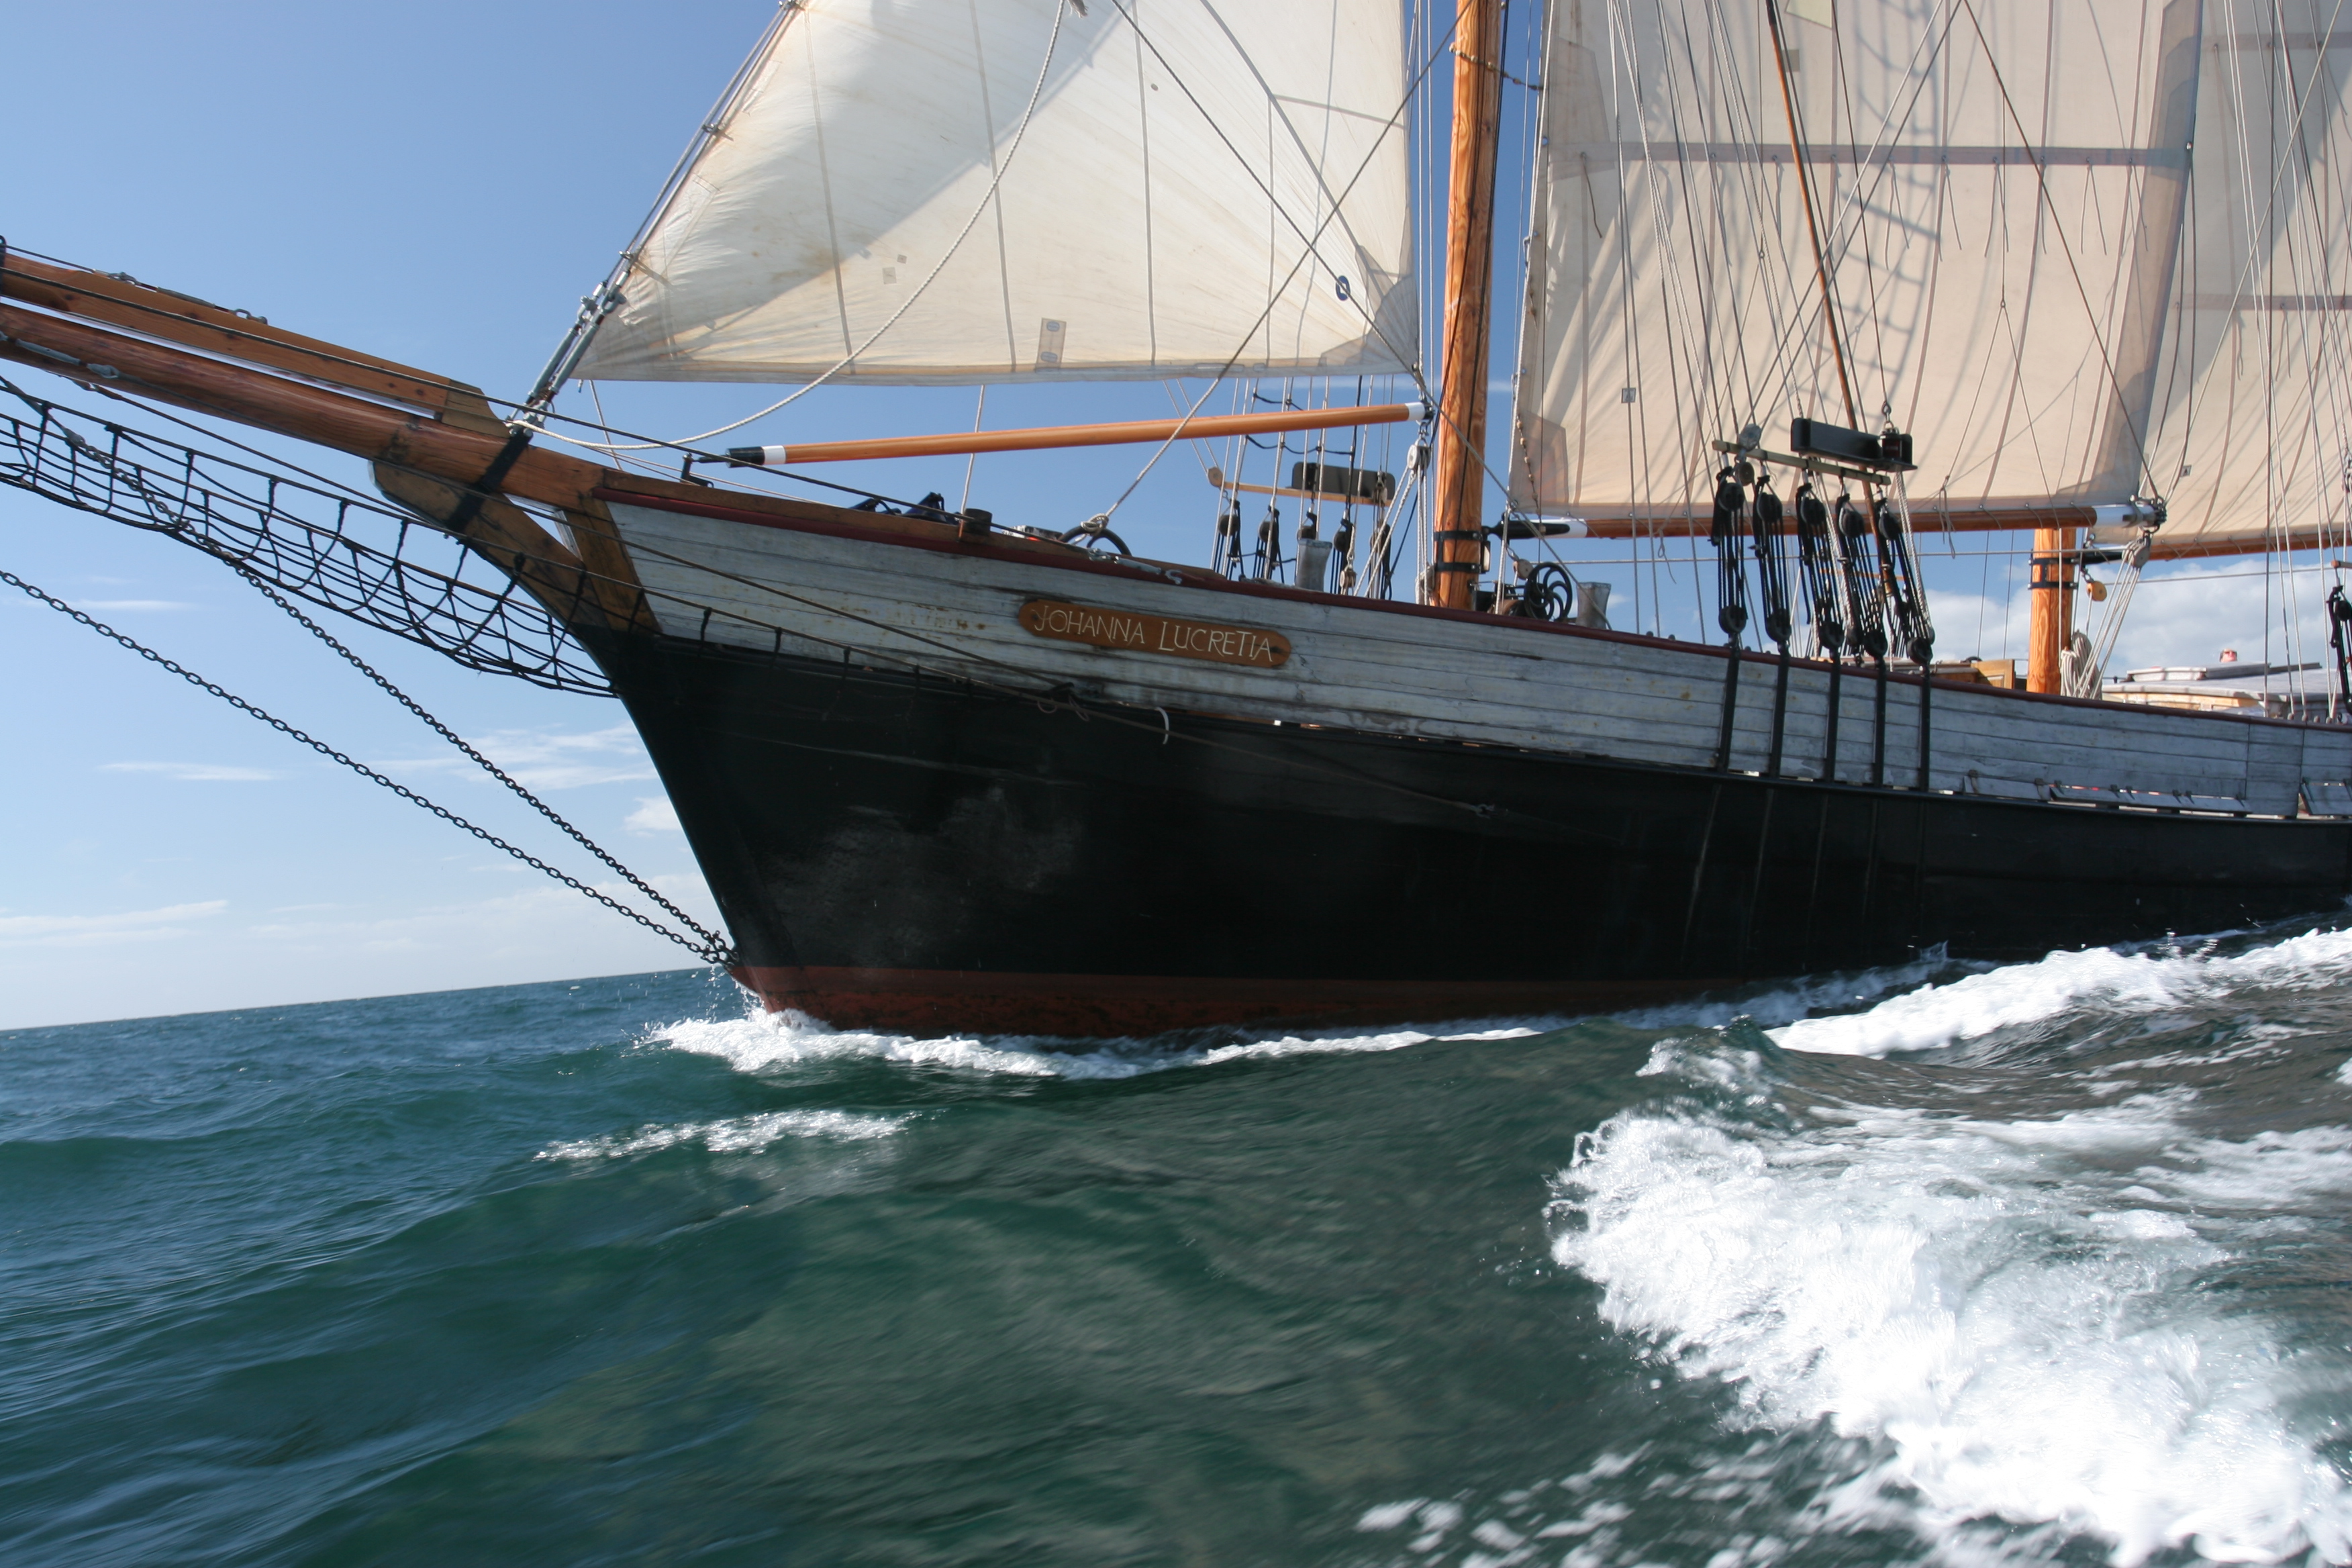 Wooden topsail schooner Johanna Lucretia